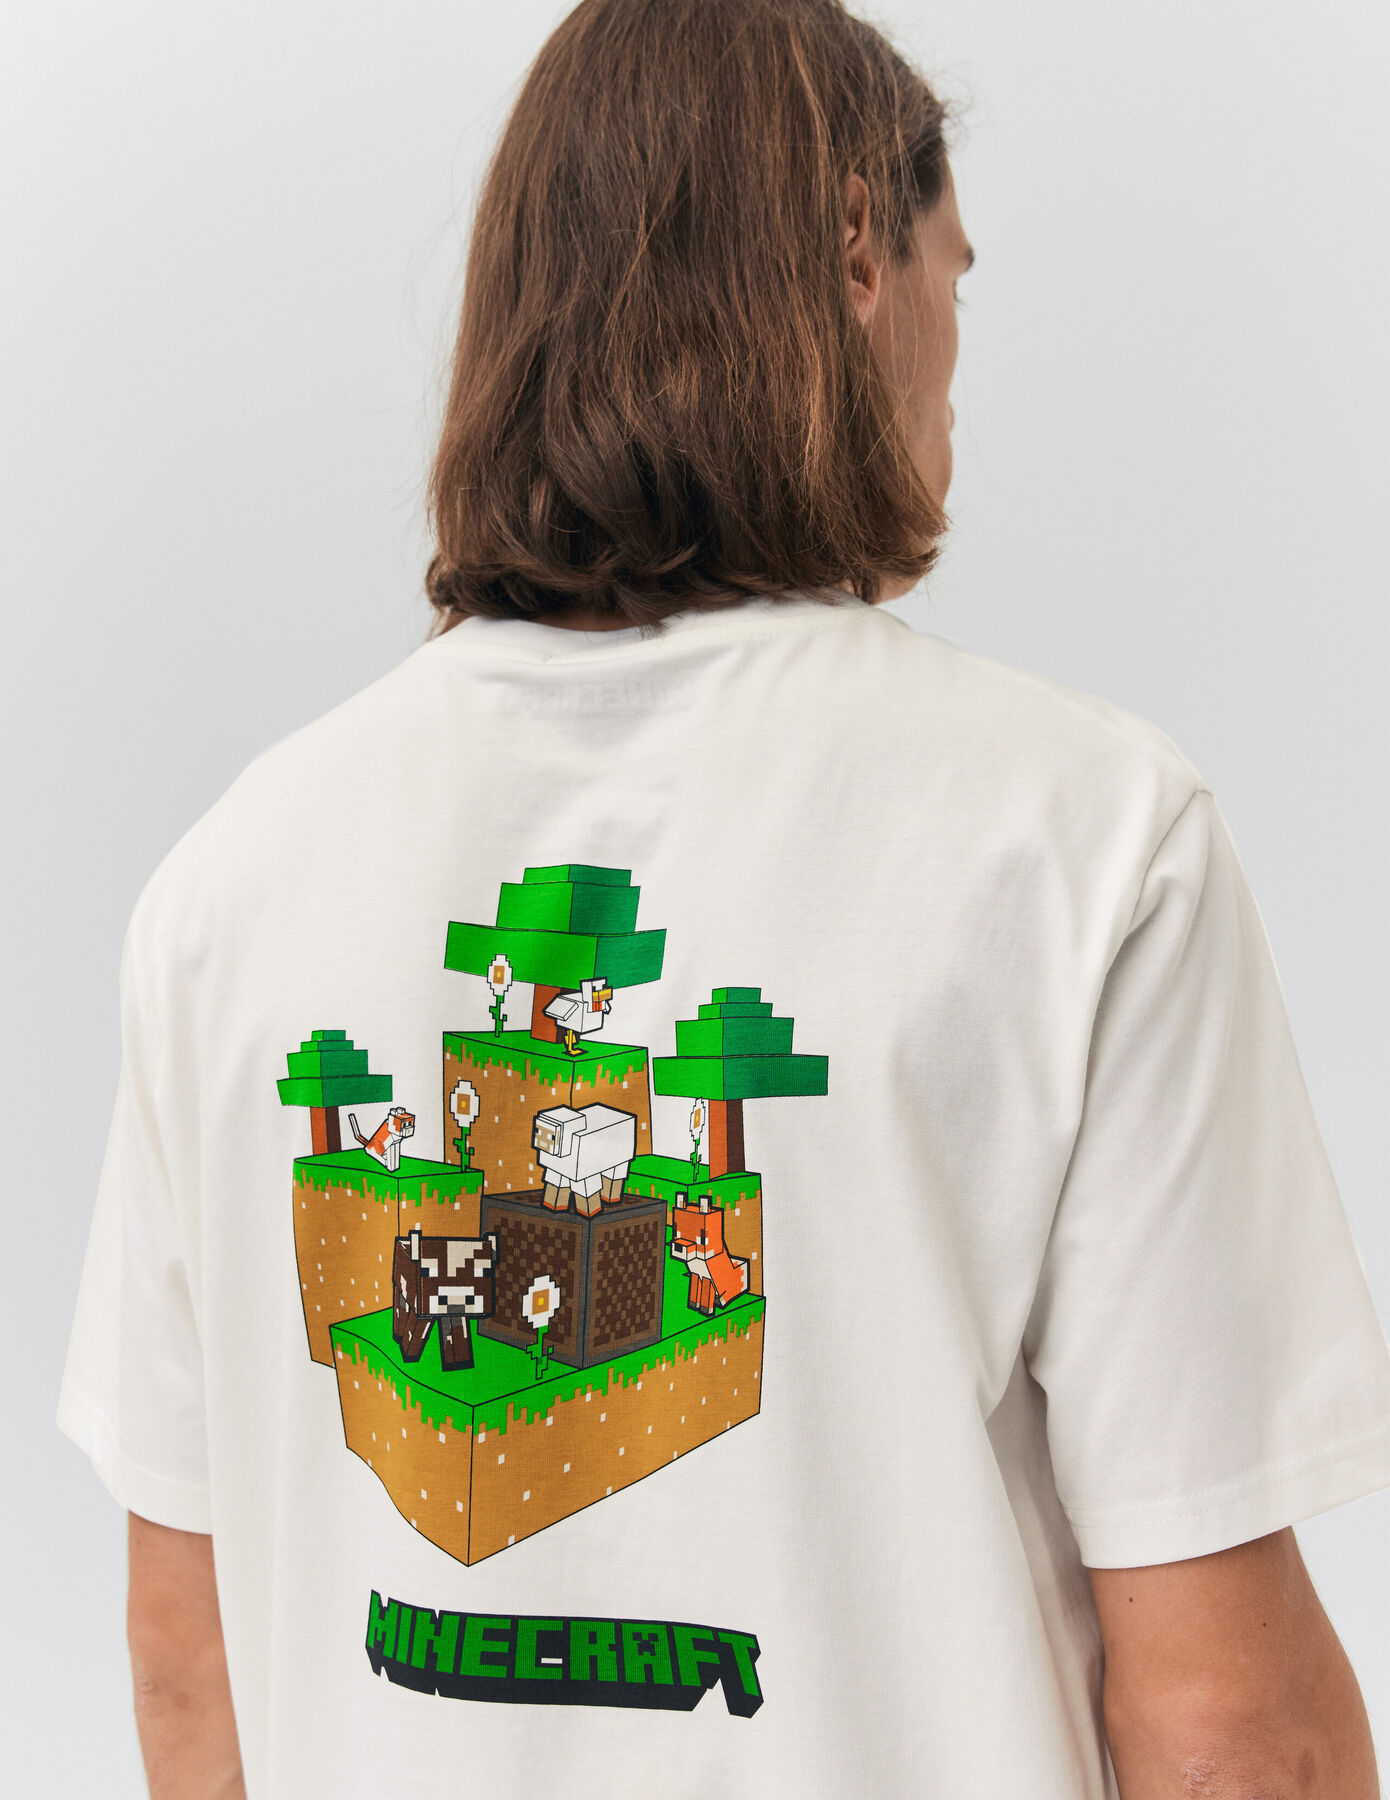 T-shirt collab Minecraft